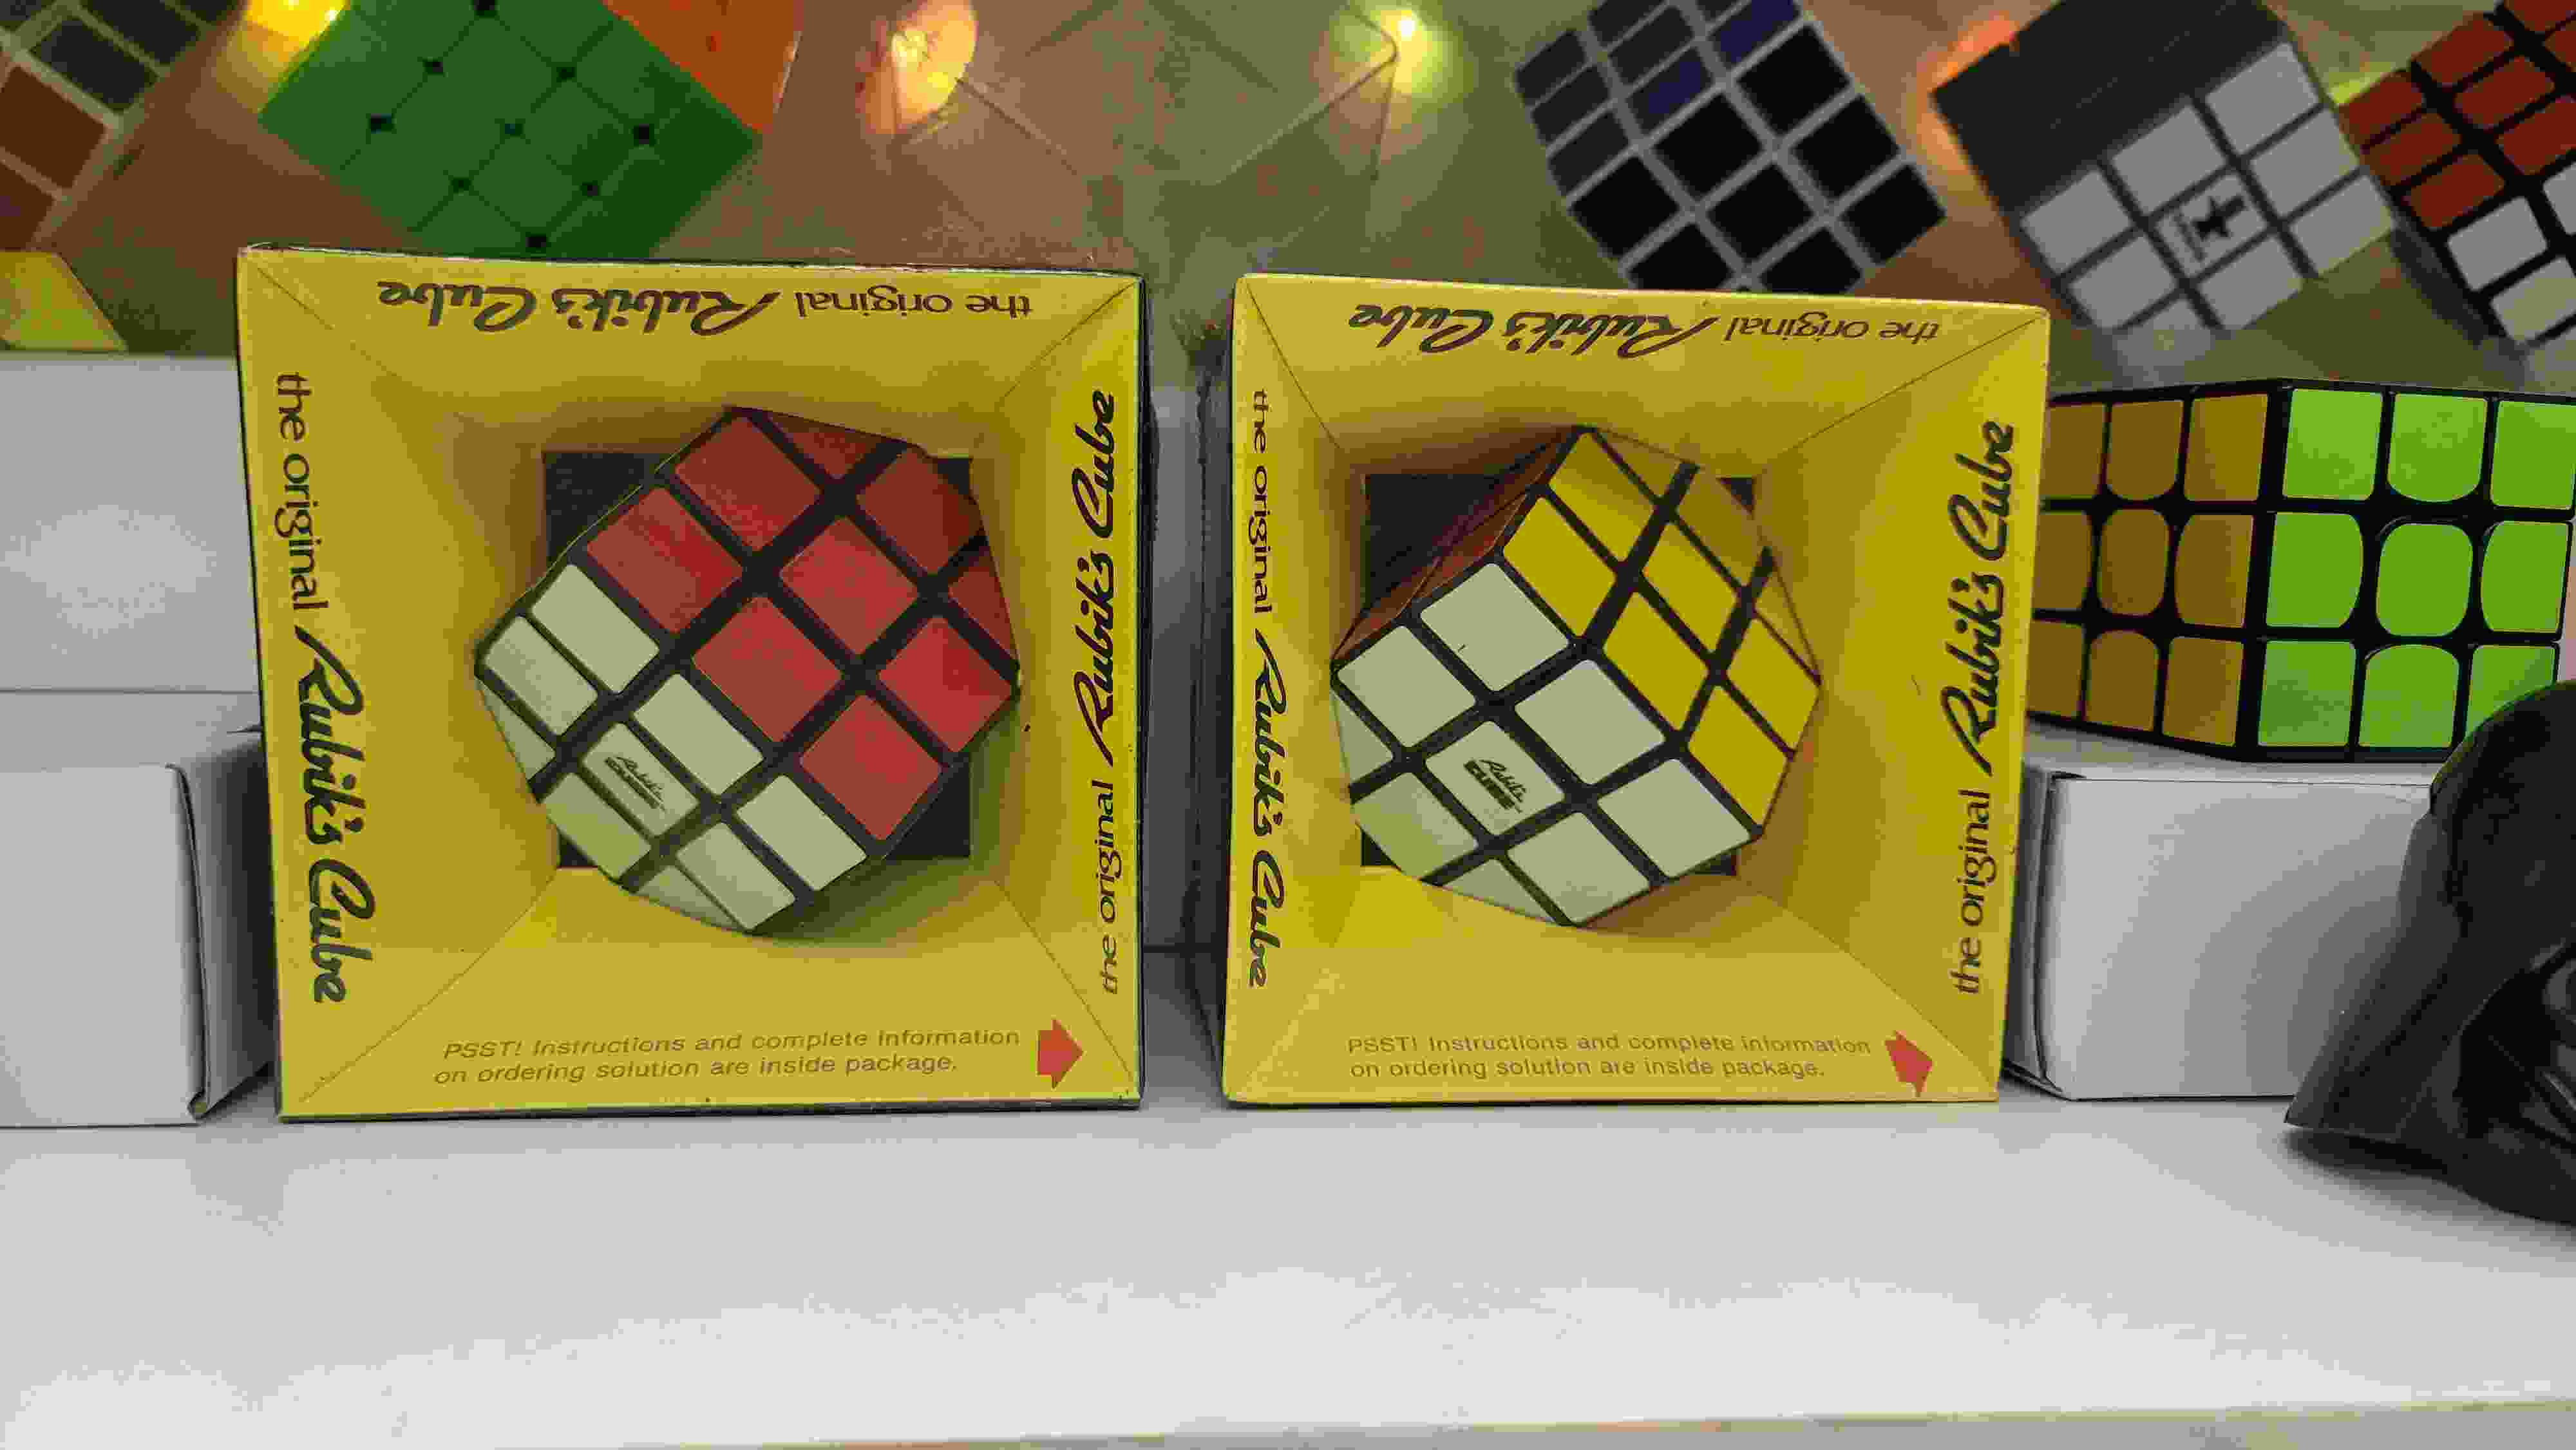 The original Rubix Cube